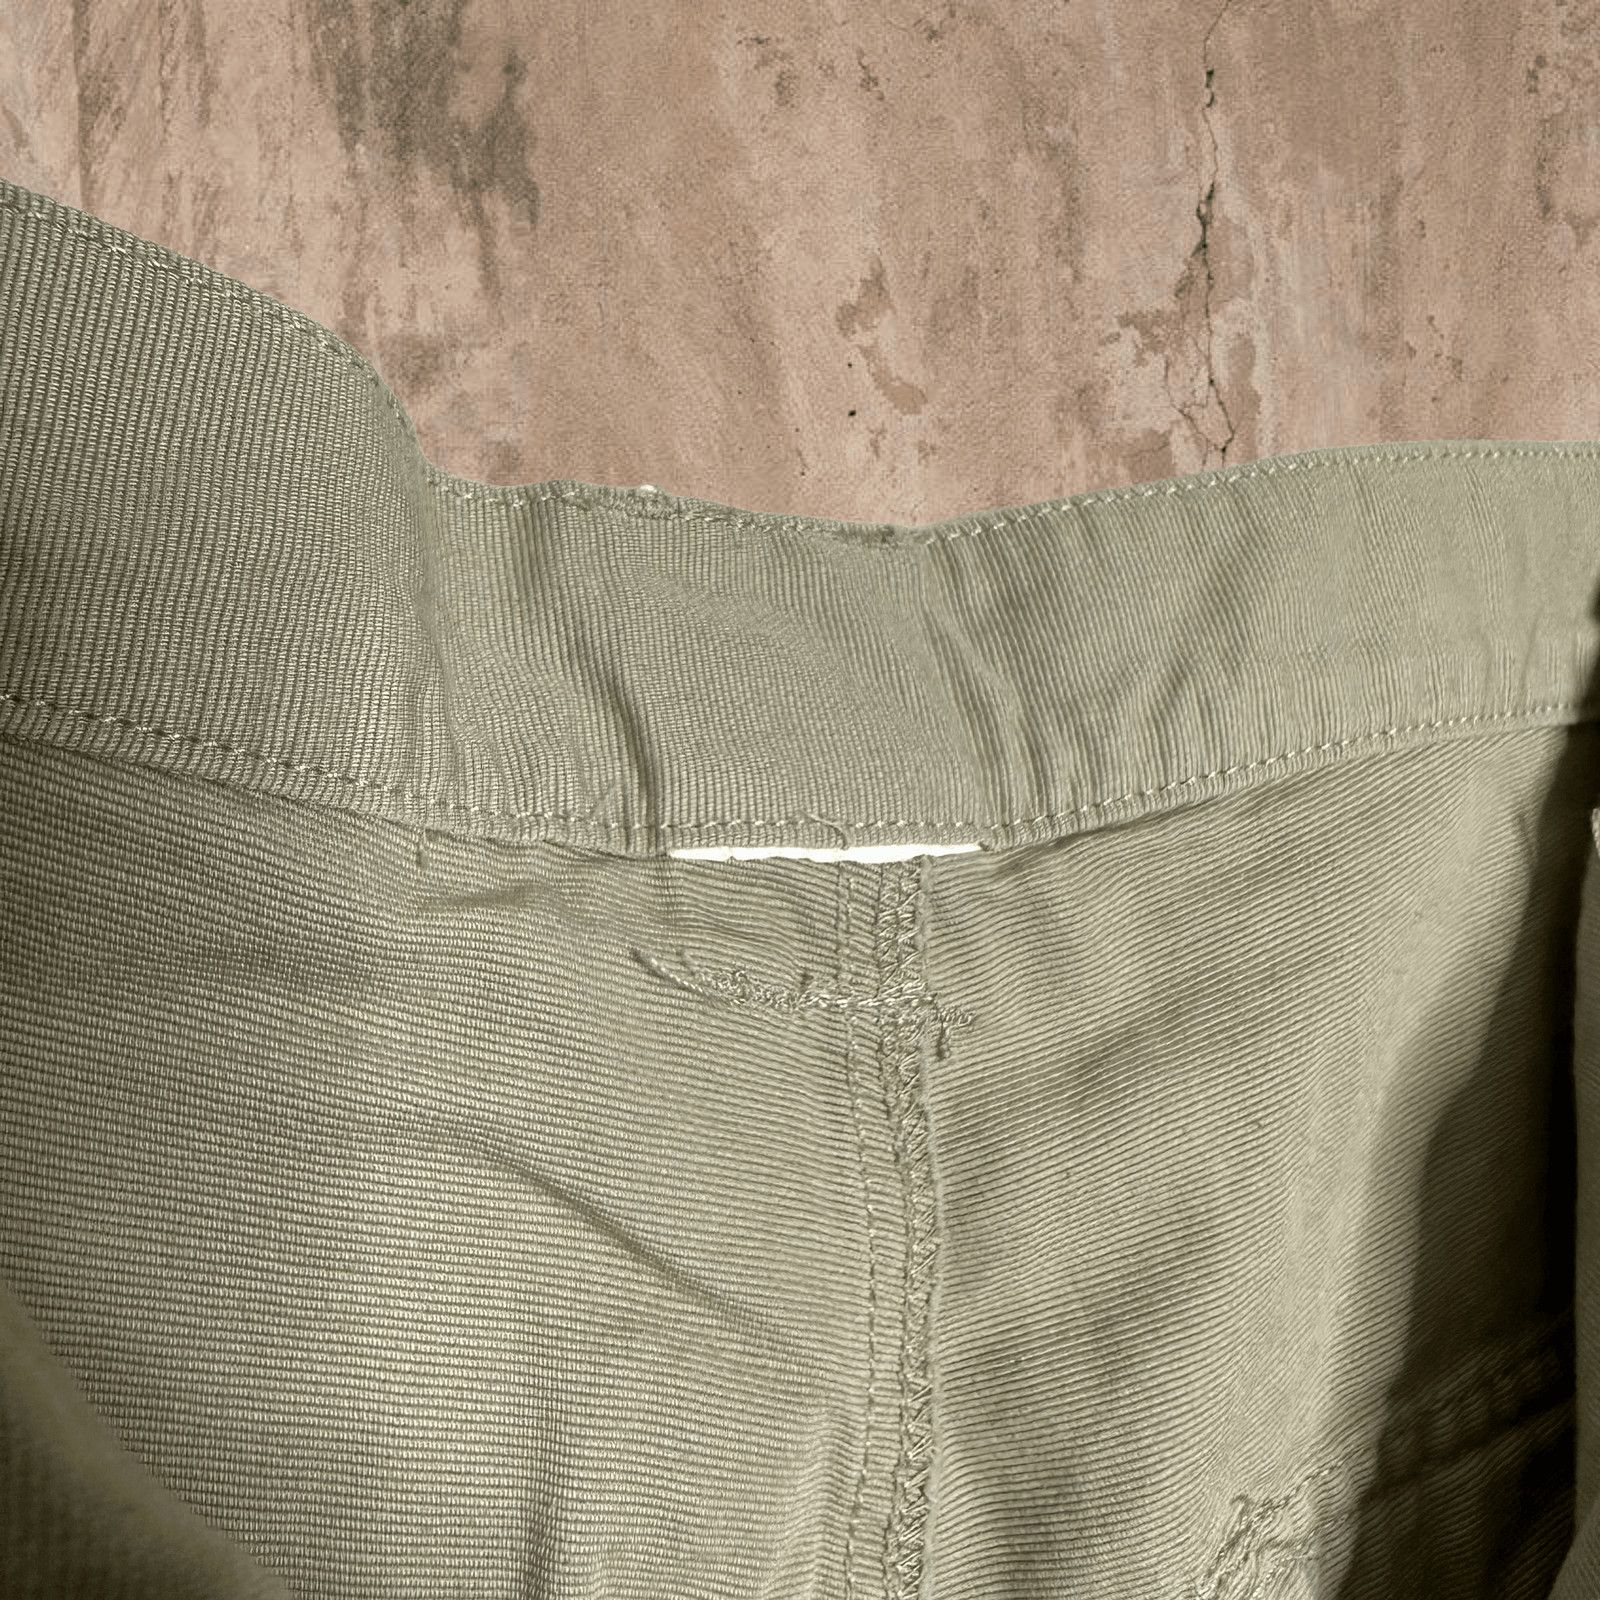 Vintage Light Tan Wrangler Cargo Pants Baggy Fit Size US 34 / EU 50 - 5 Preview